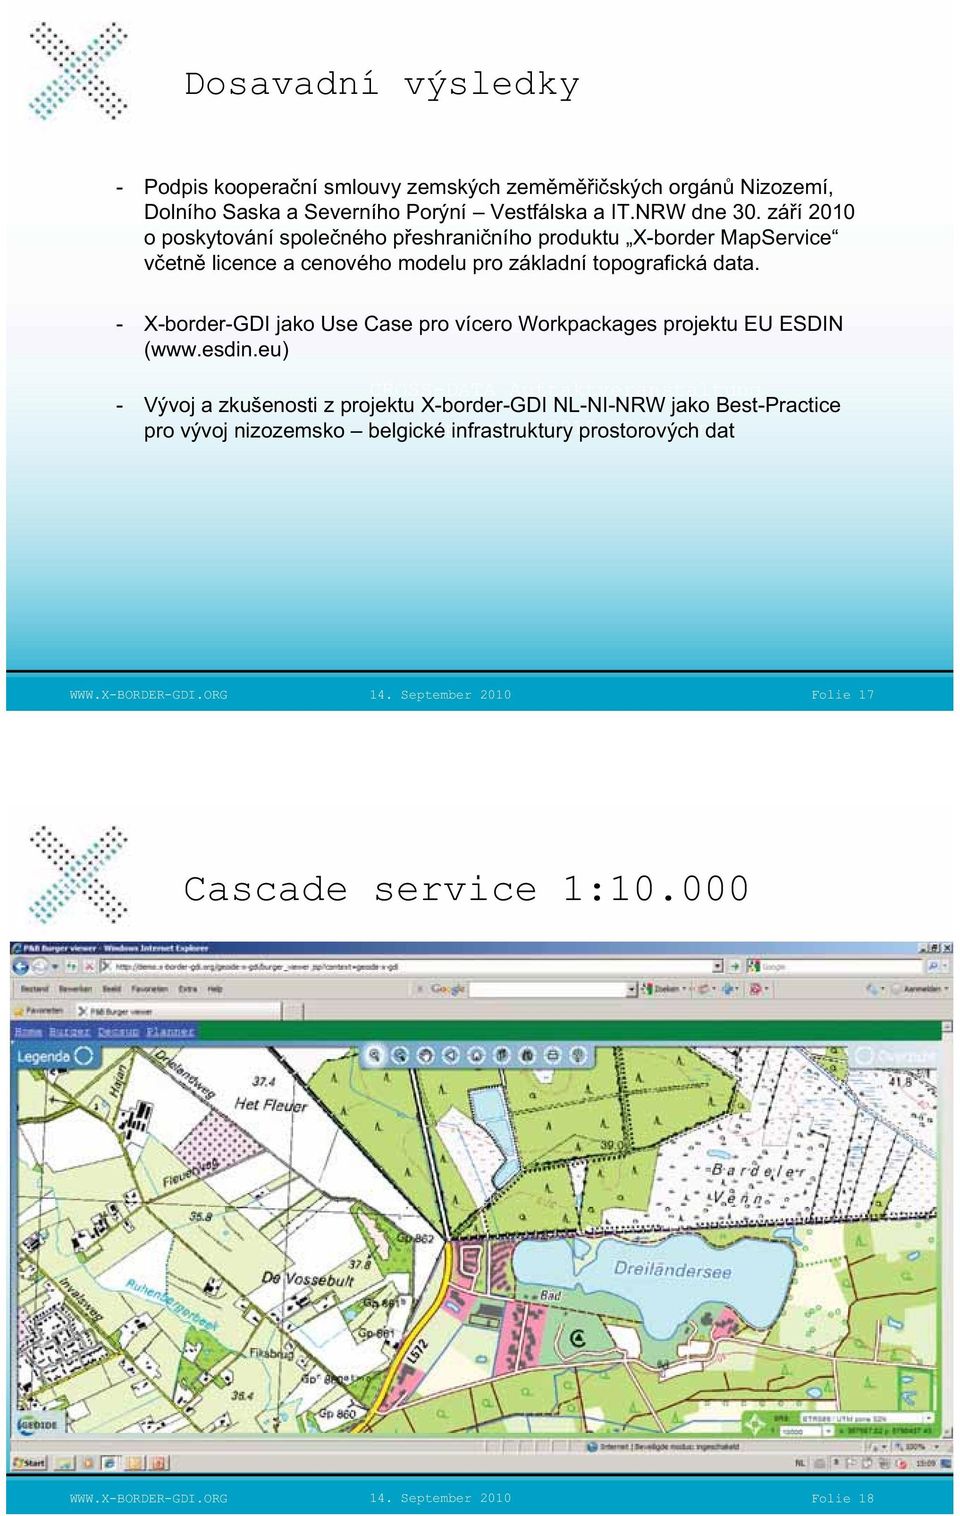 - X-border-GDI jako Use Case Sven pro Robertz vícero Workpackages projektu EU ESDIN (www.esdin.